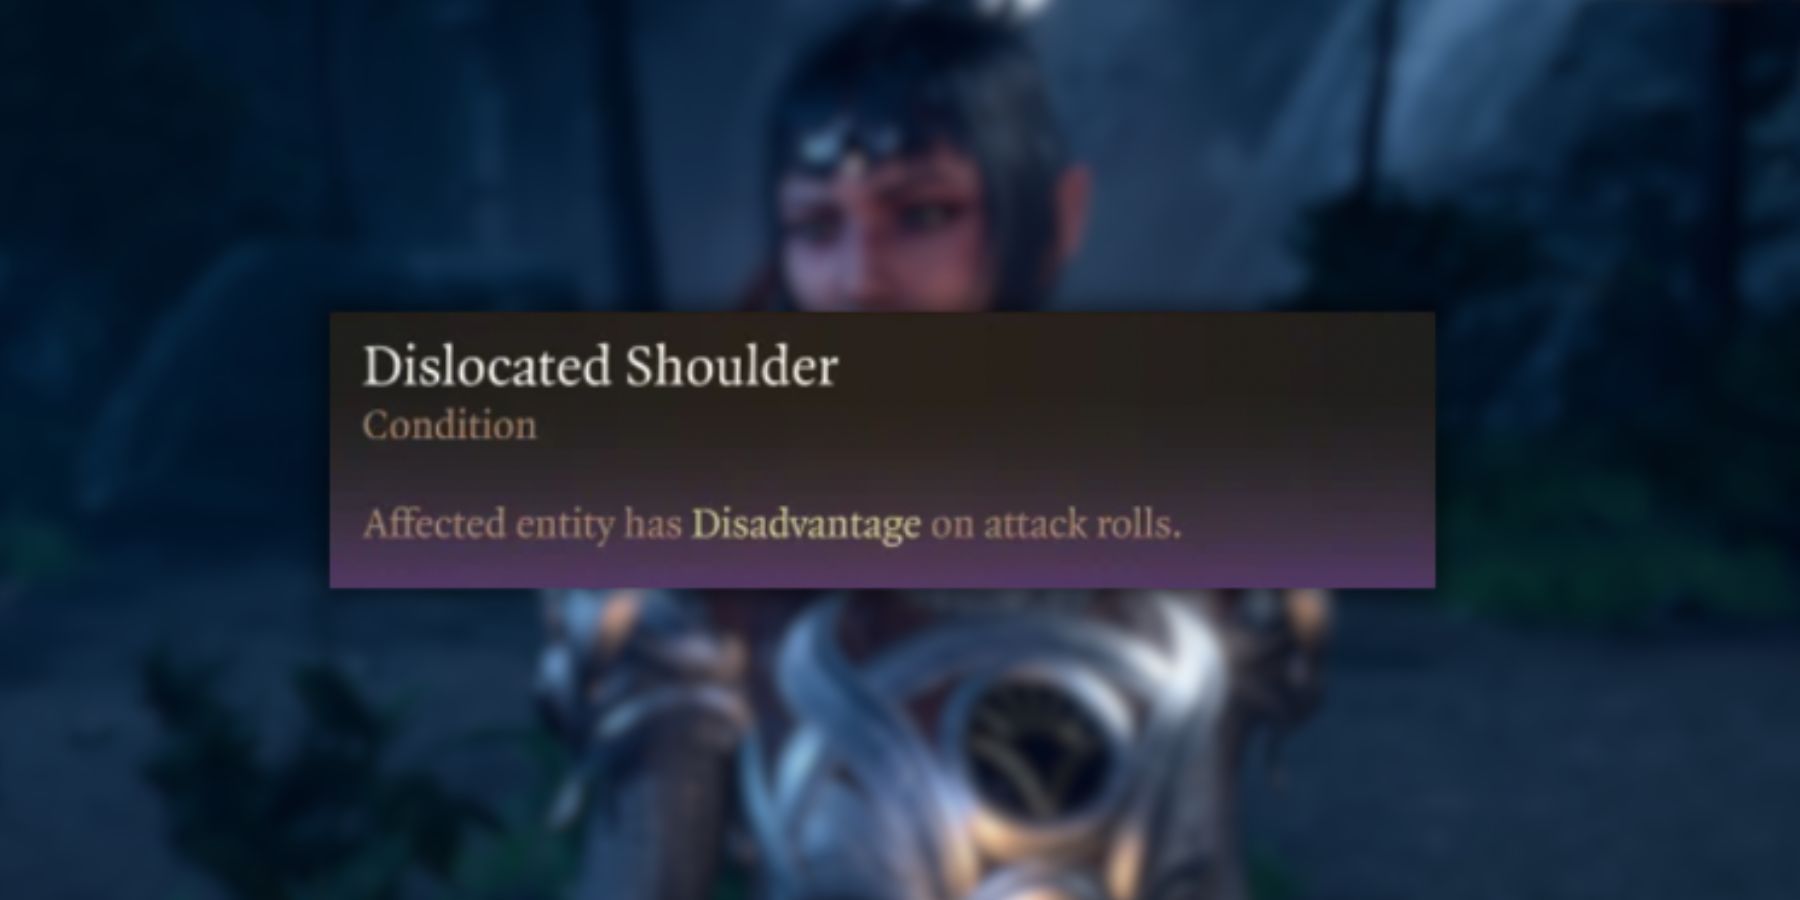 Dislocated Shoulder Condition in Baldur’s Gate 3